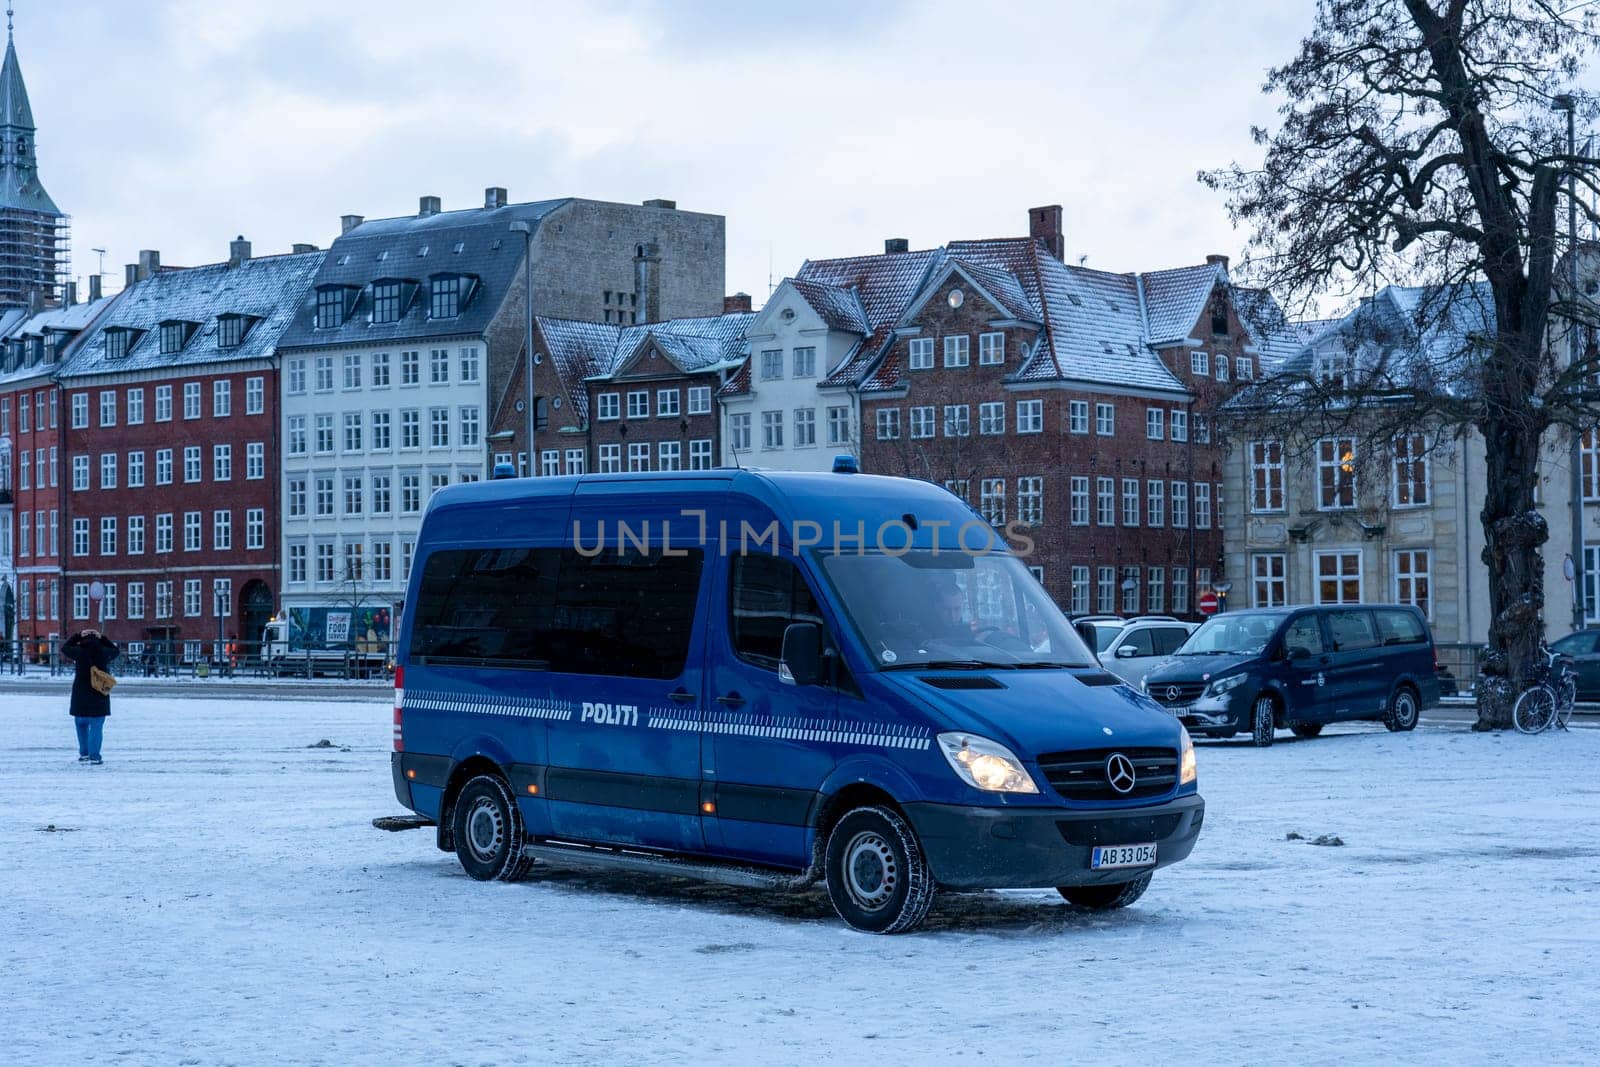 Copenhagen, Denmark. - January 4, 2024: A police car parked in the city center.